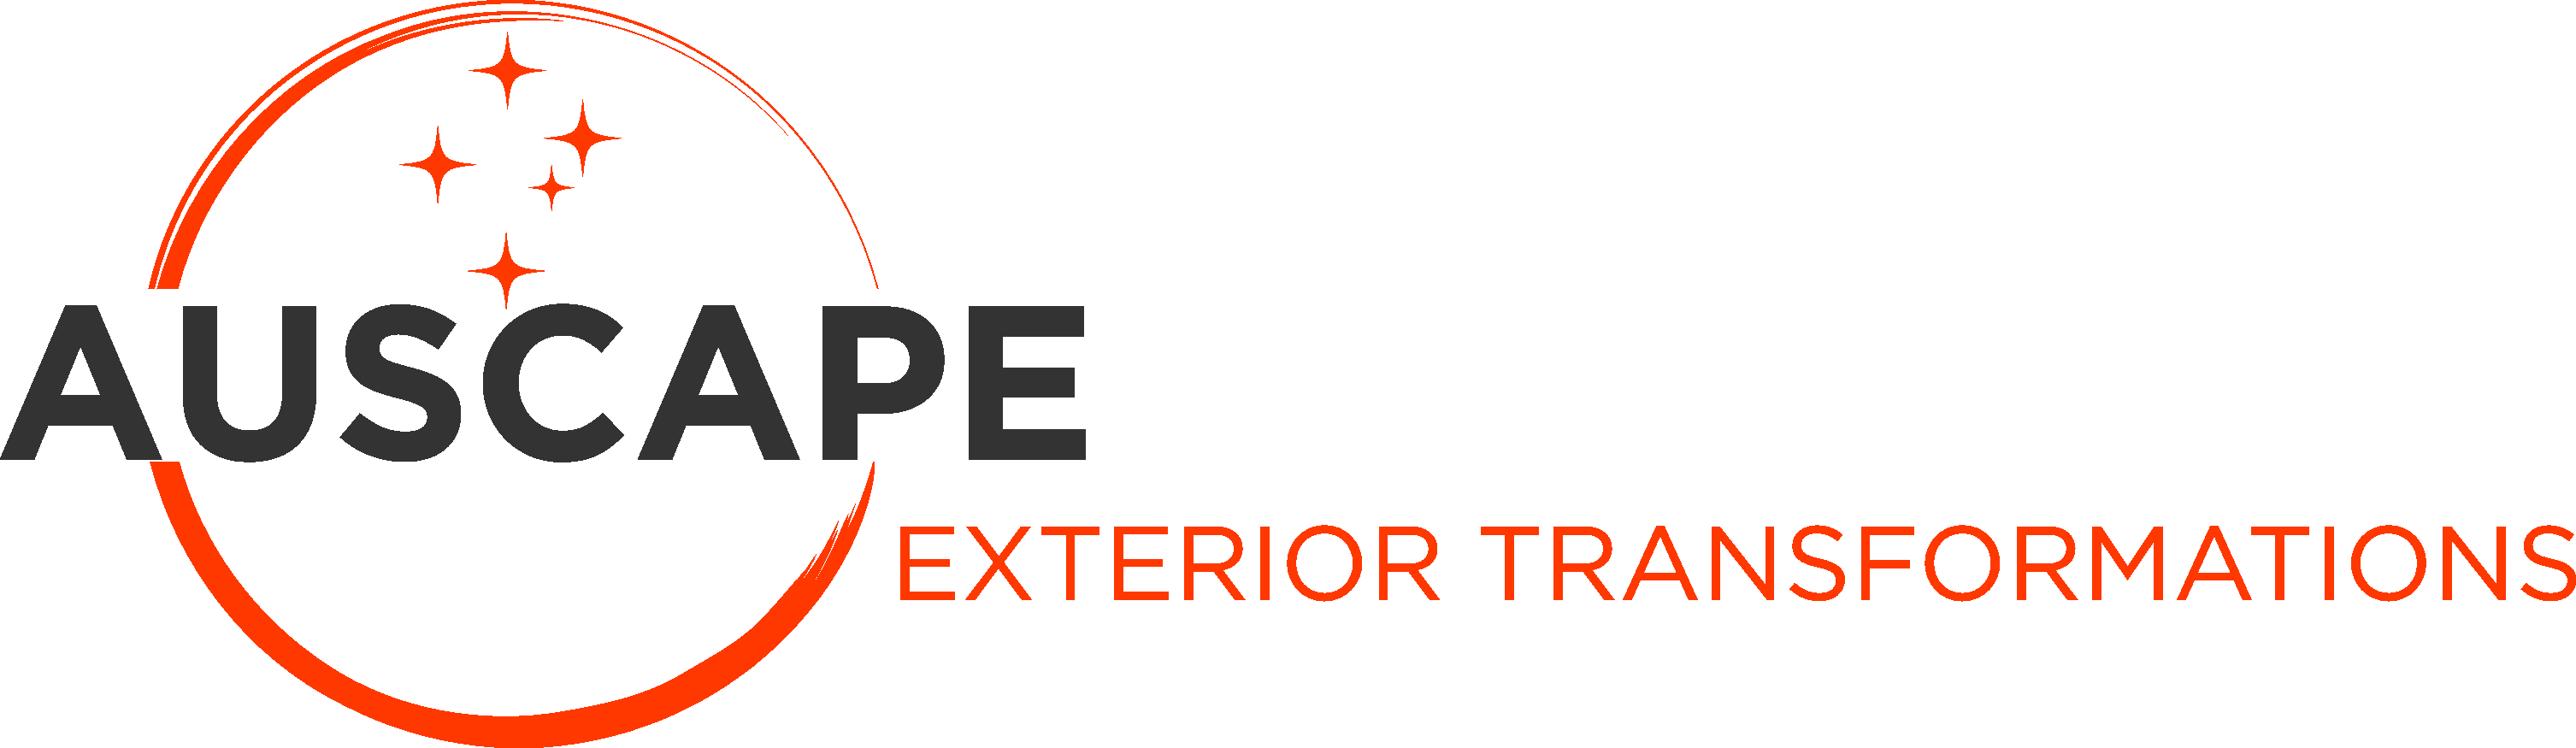 Auscape Exterior Transformations Logo